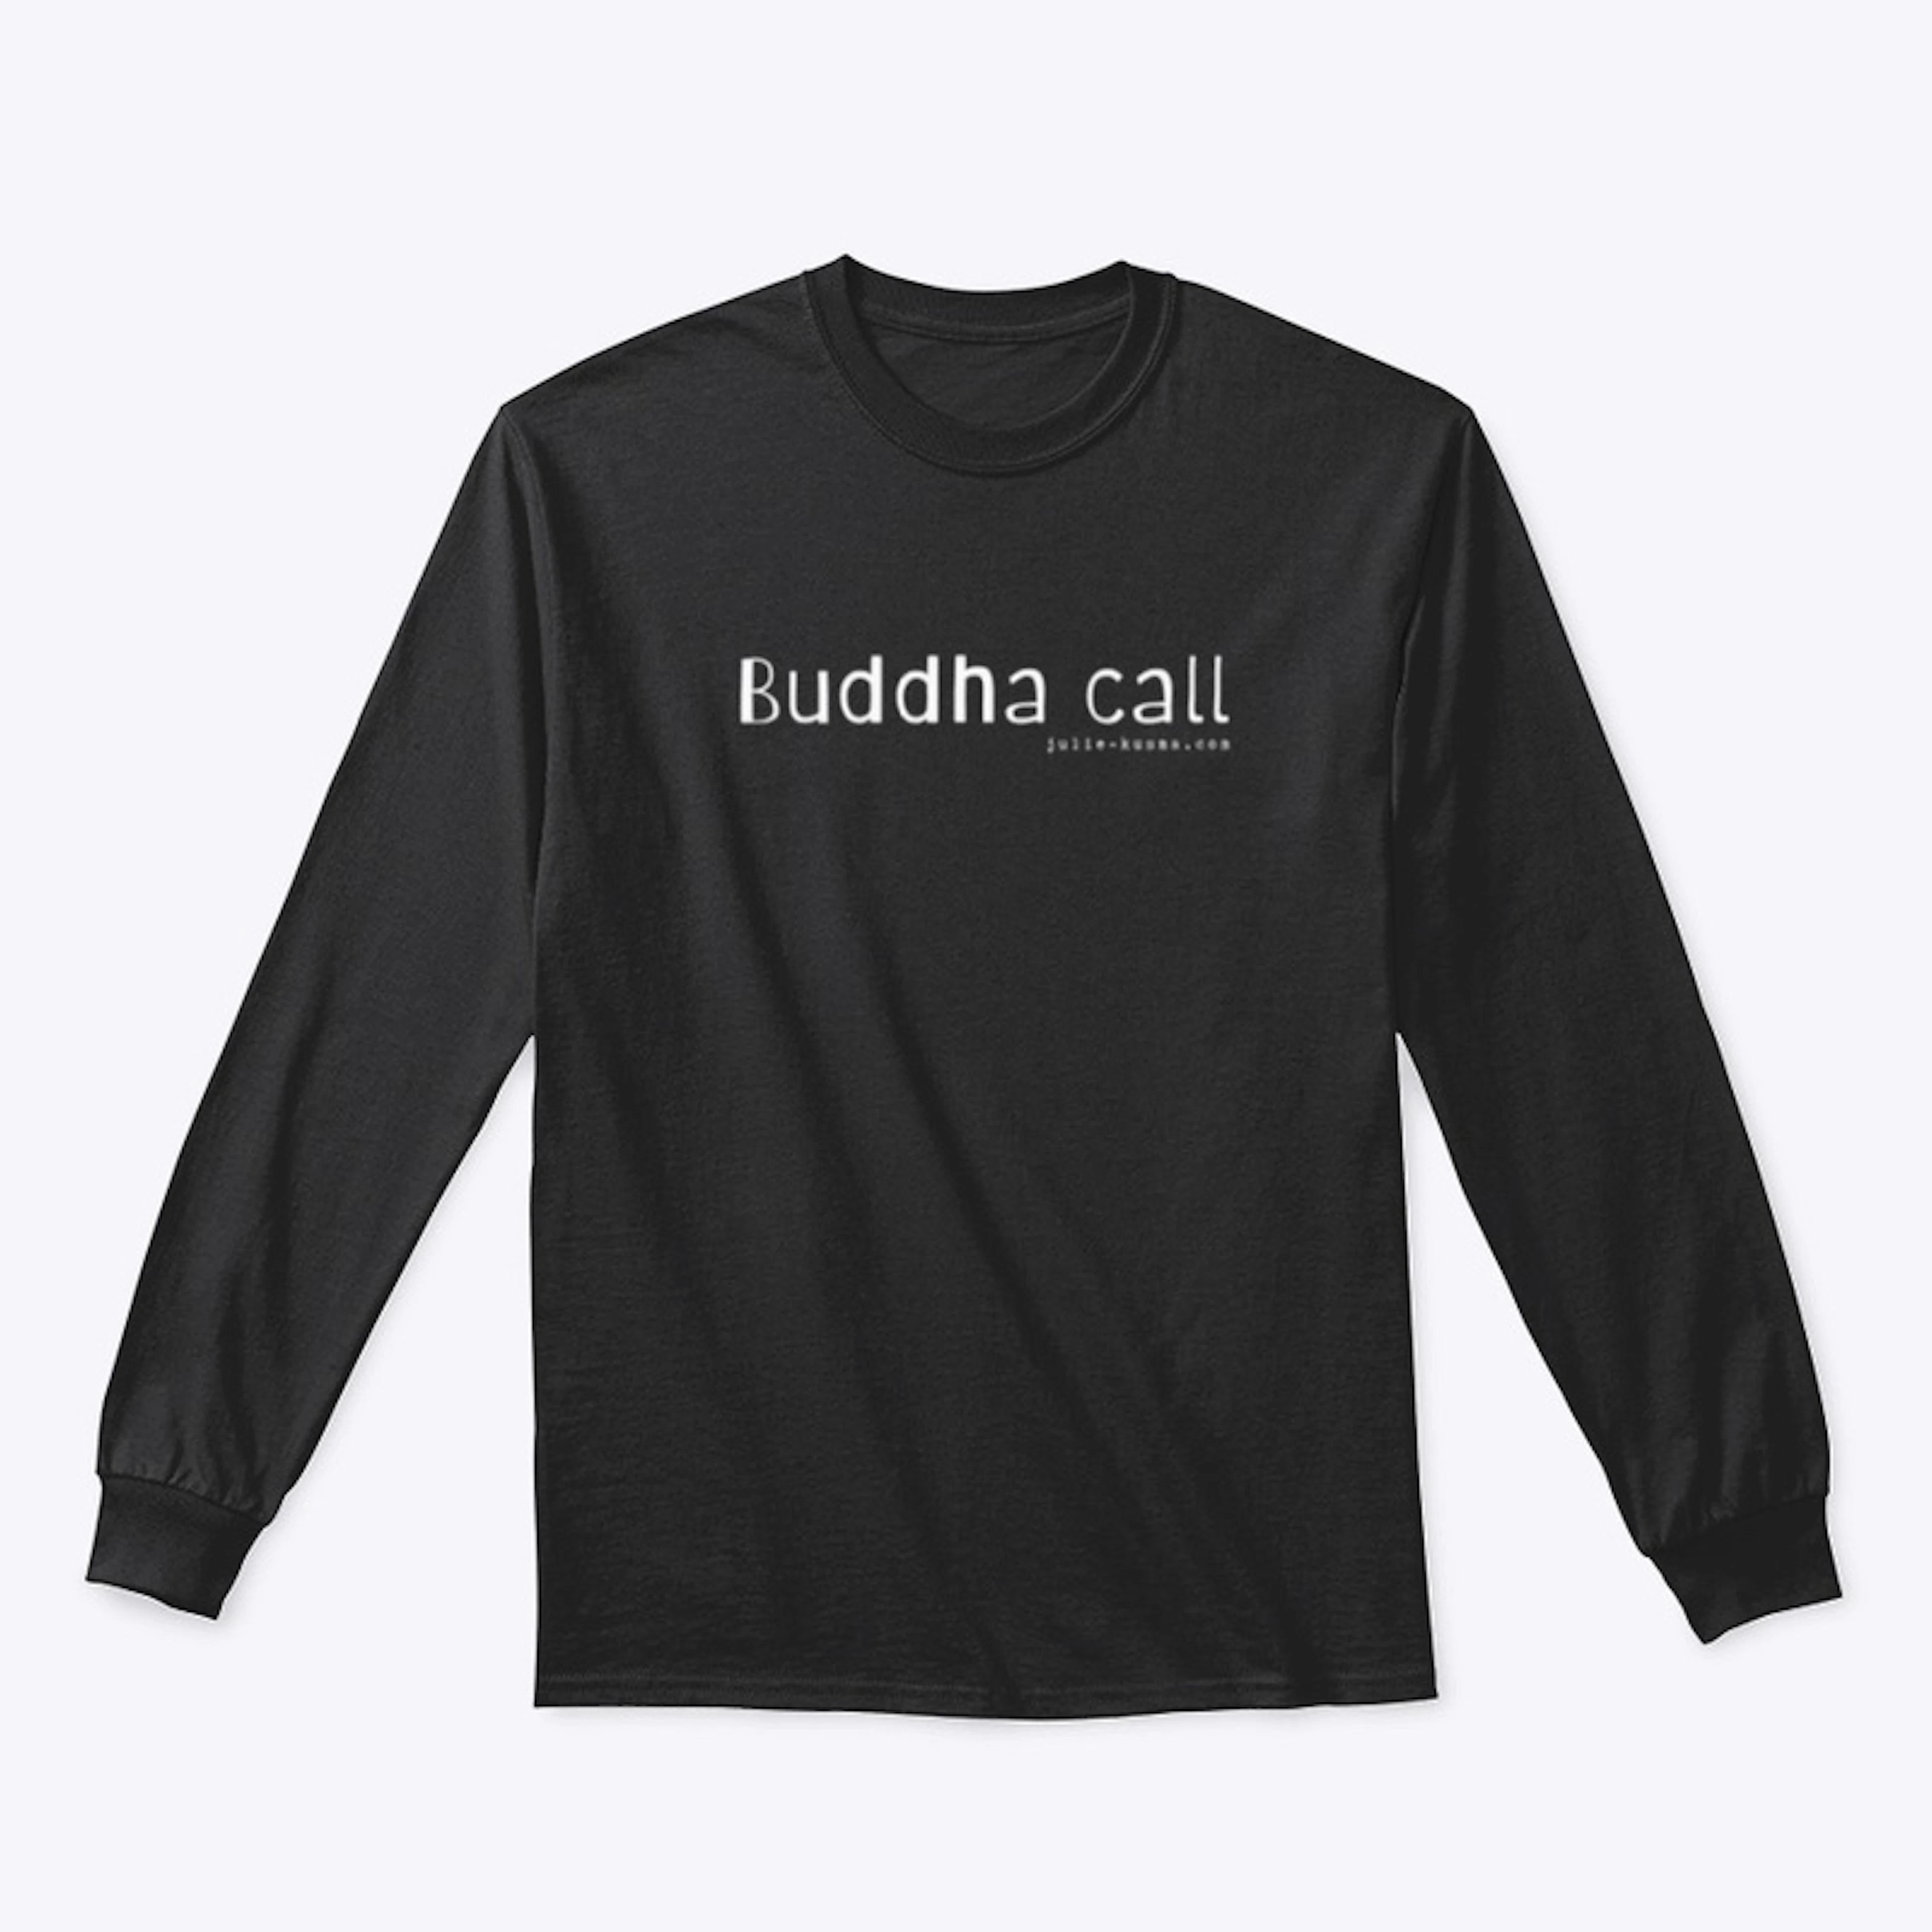 Line Please "Buddha Call" White font